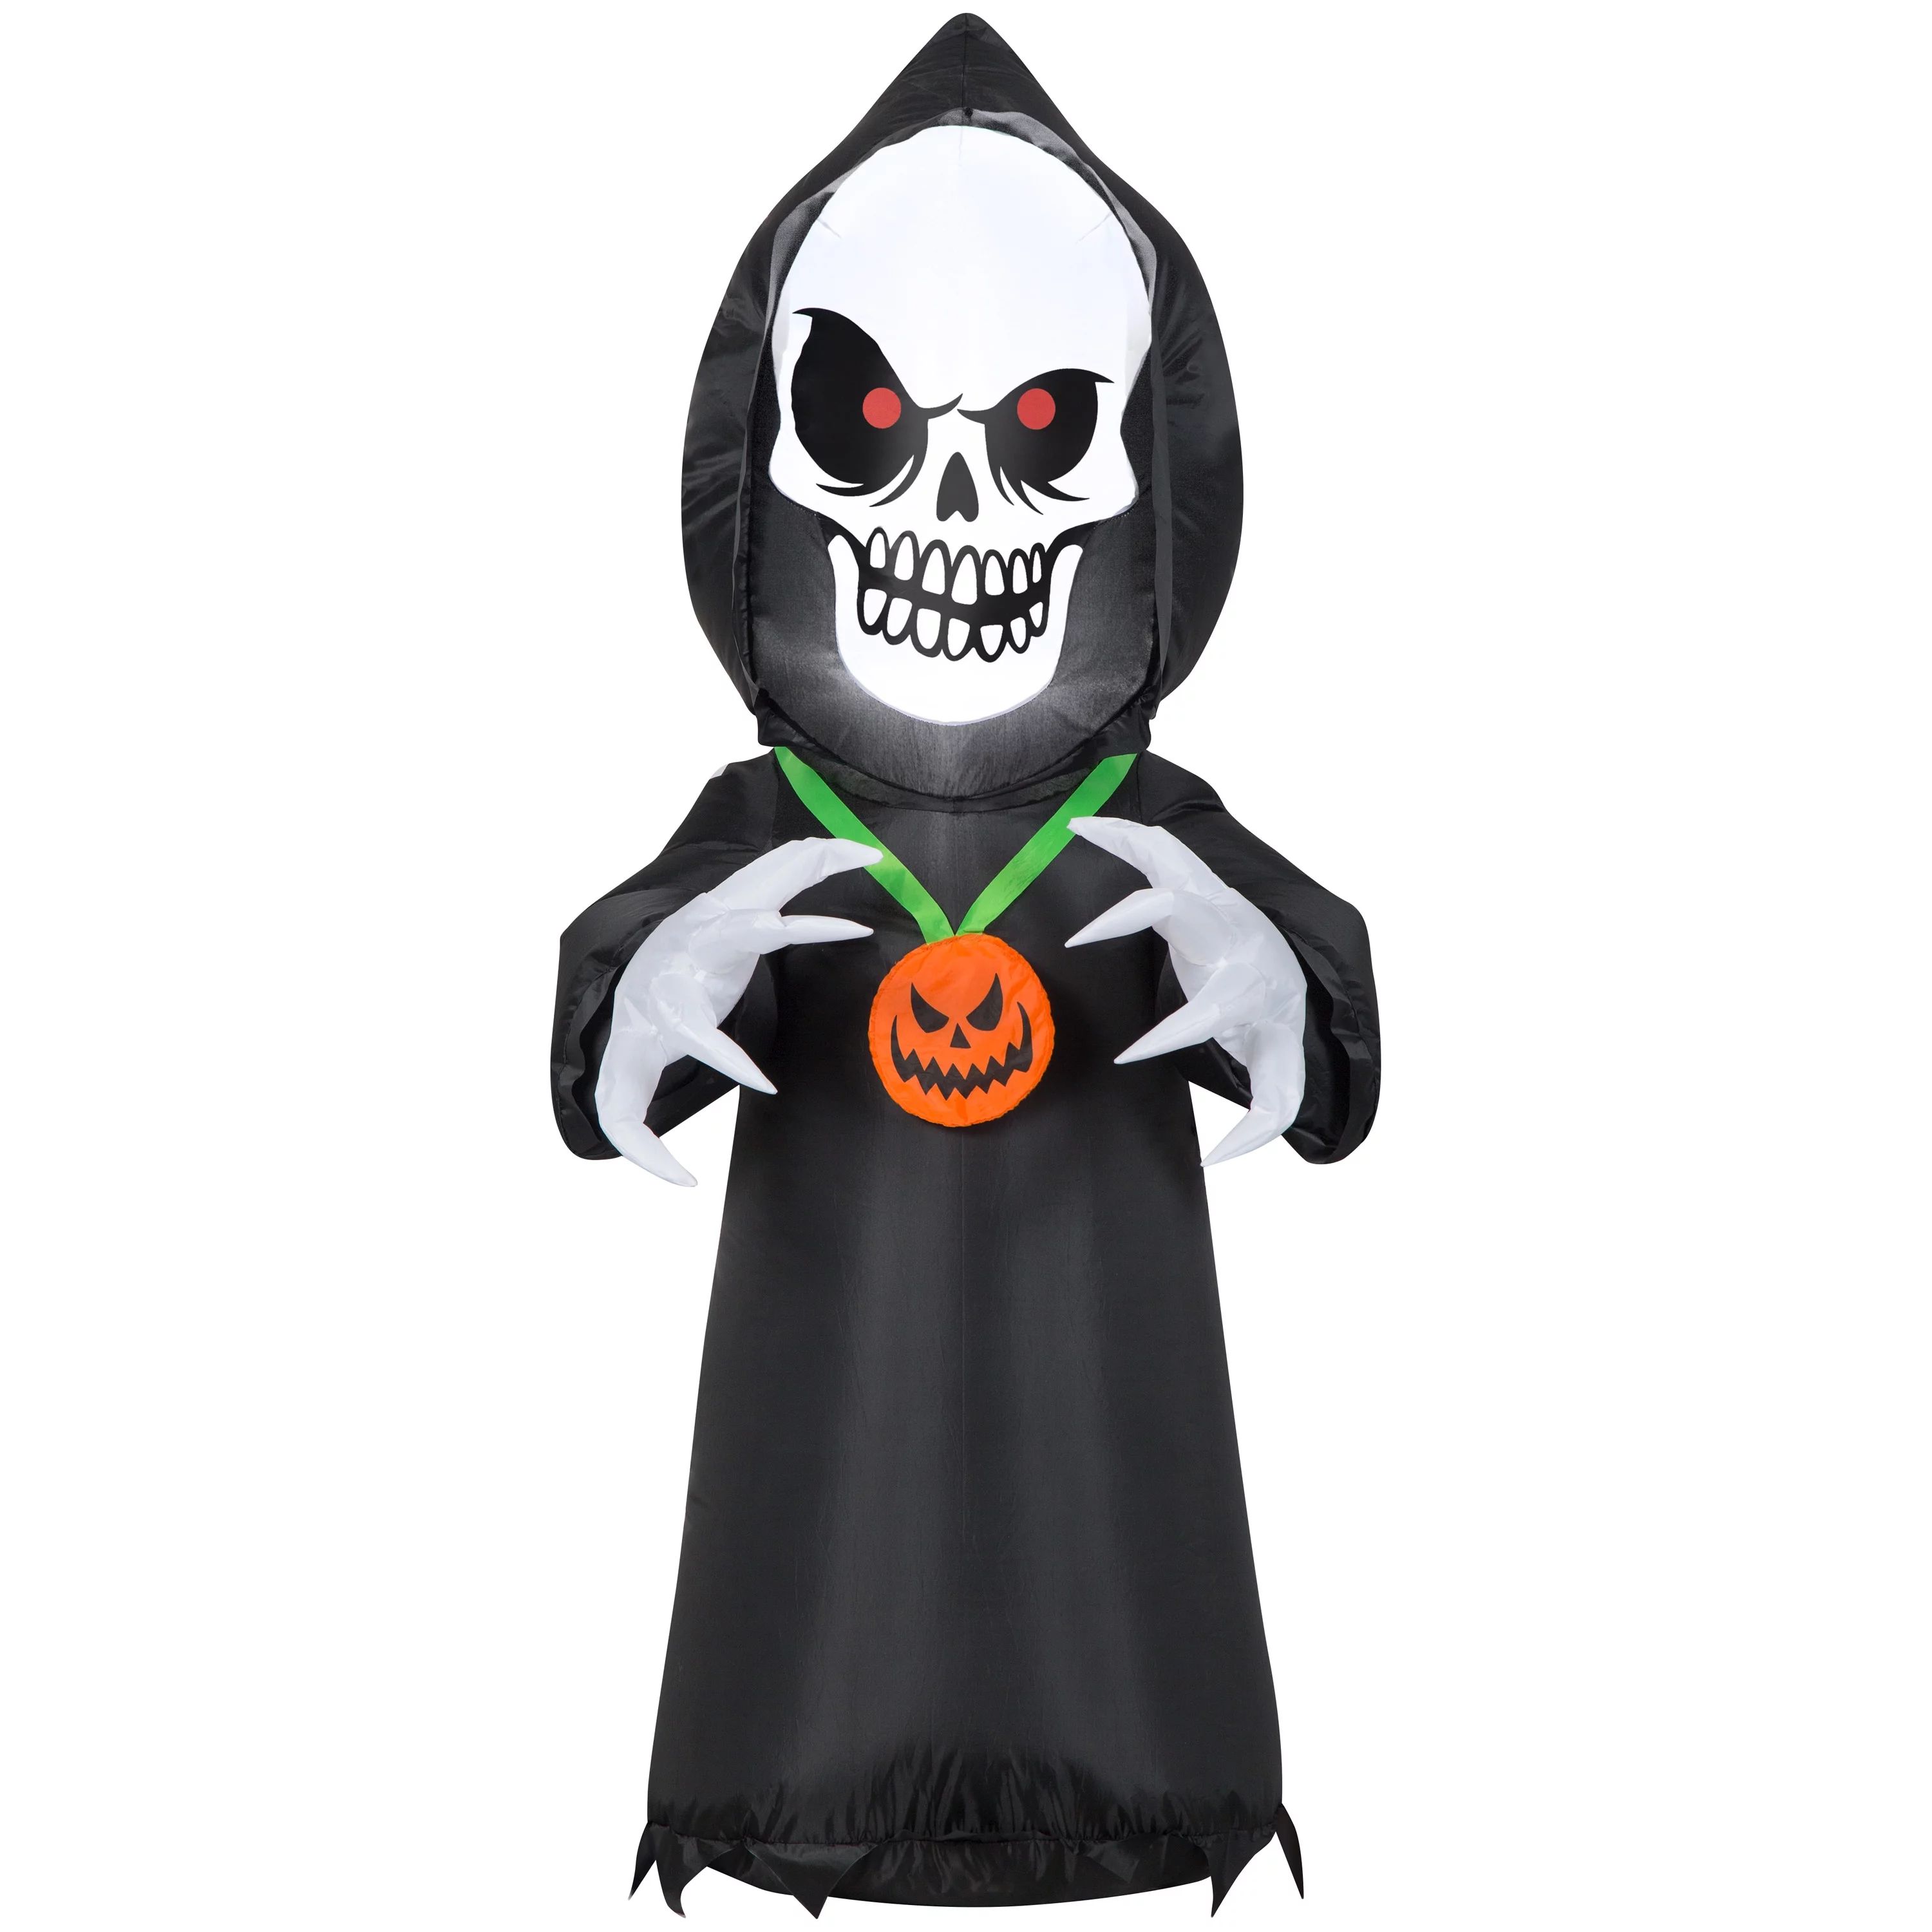 Halloween Skull Reaper Decoration, 48 in, by Way To Celebrate | Walmart (US)